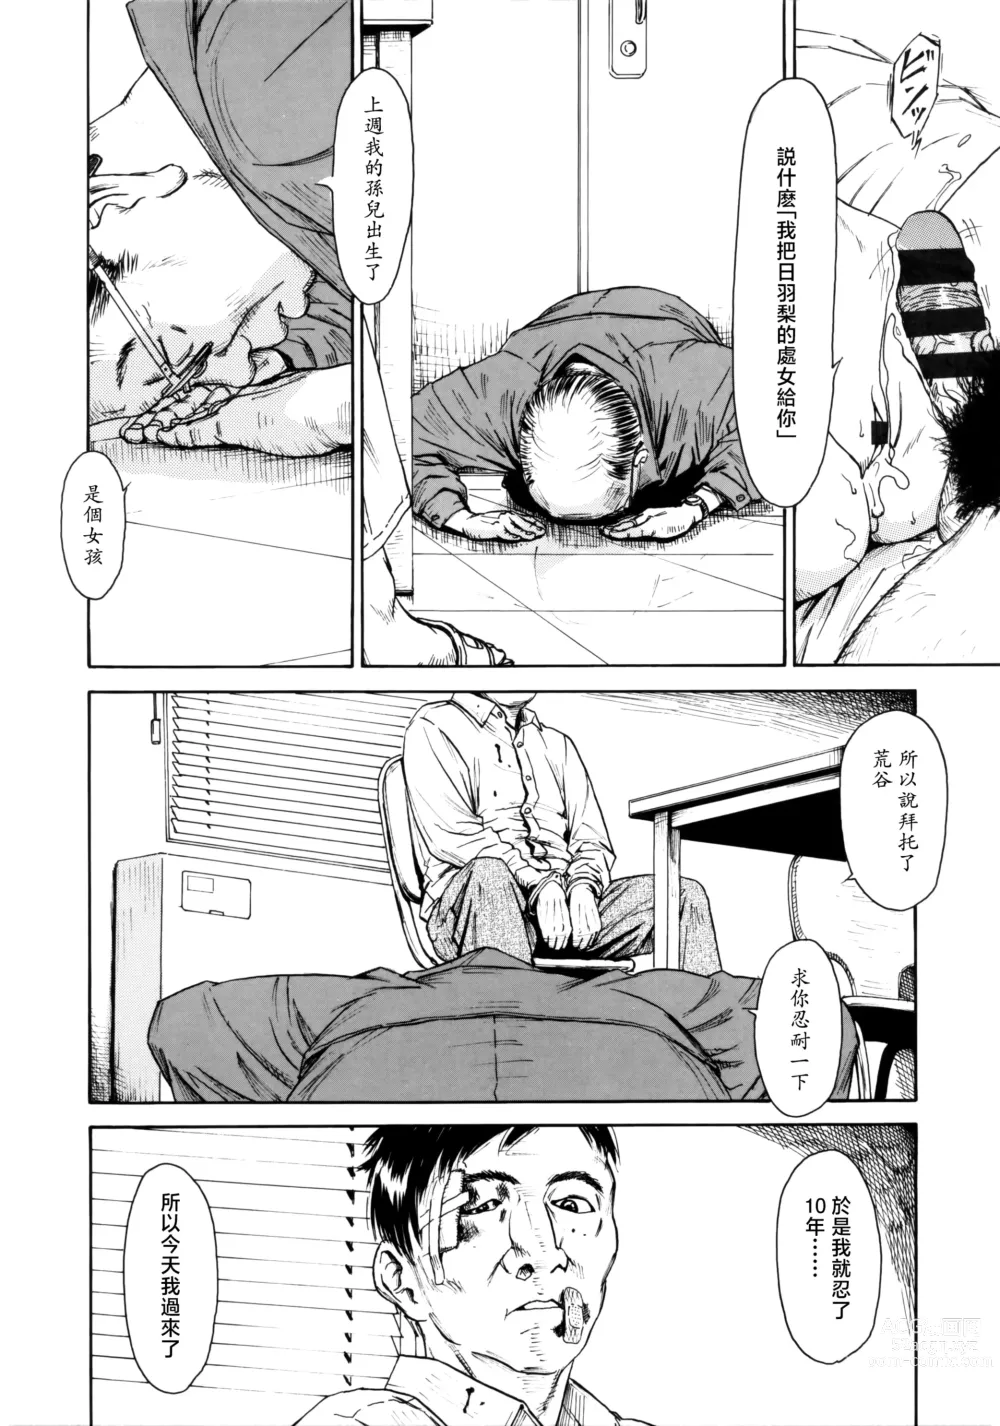 Page 11 of manga Psycho Psycho Douga